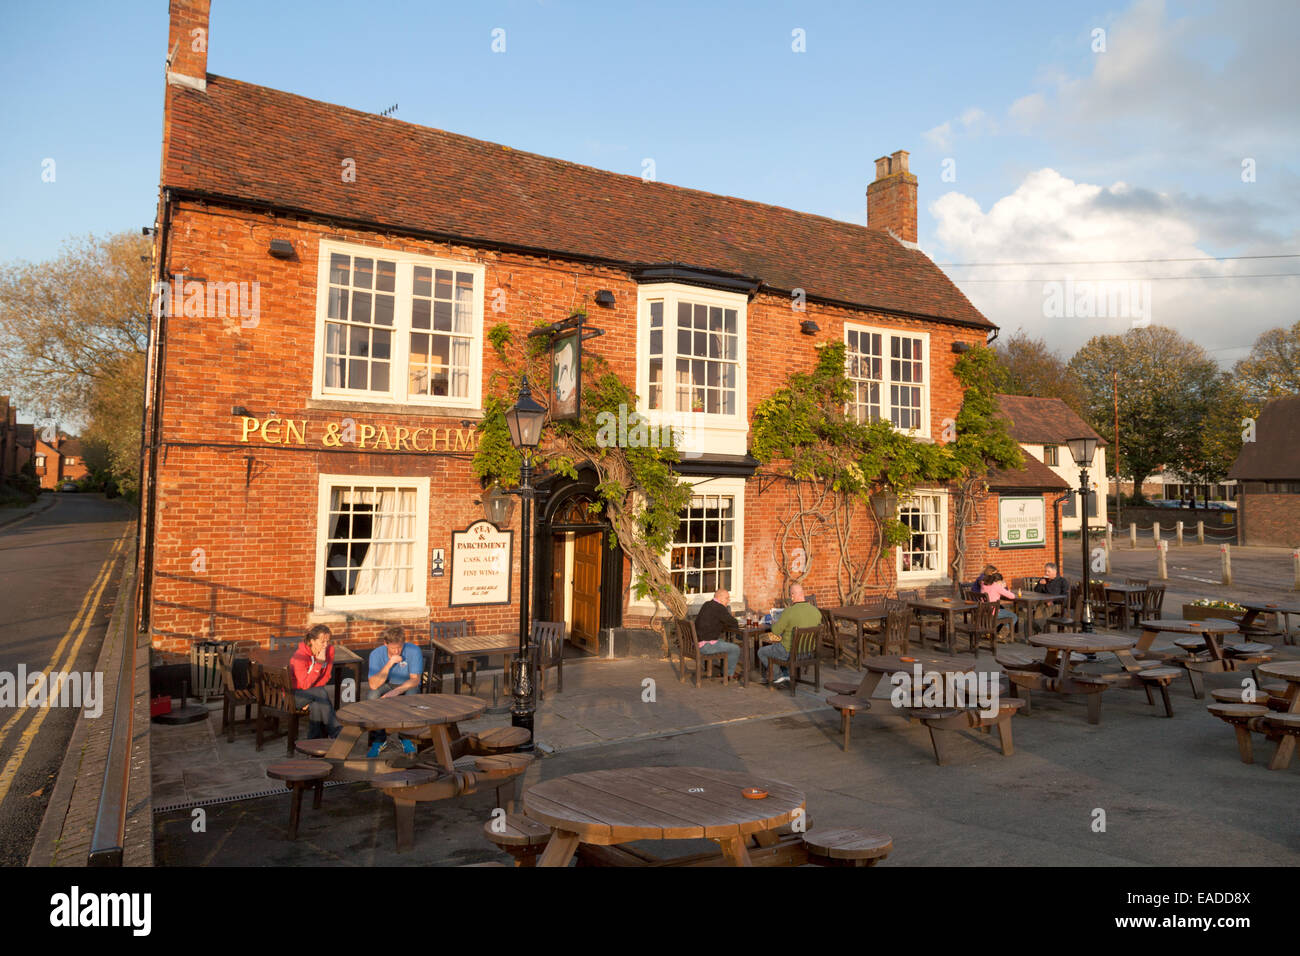 La pluma y el pergamino pub, Stratford upon Avon, Warwickshire, REINO UNIDO Foto de stock